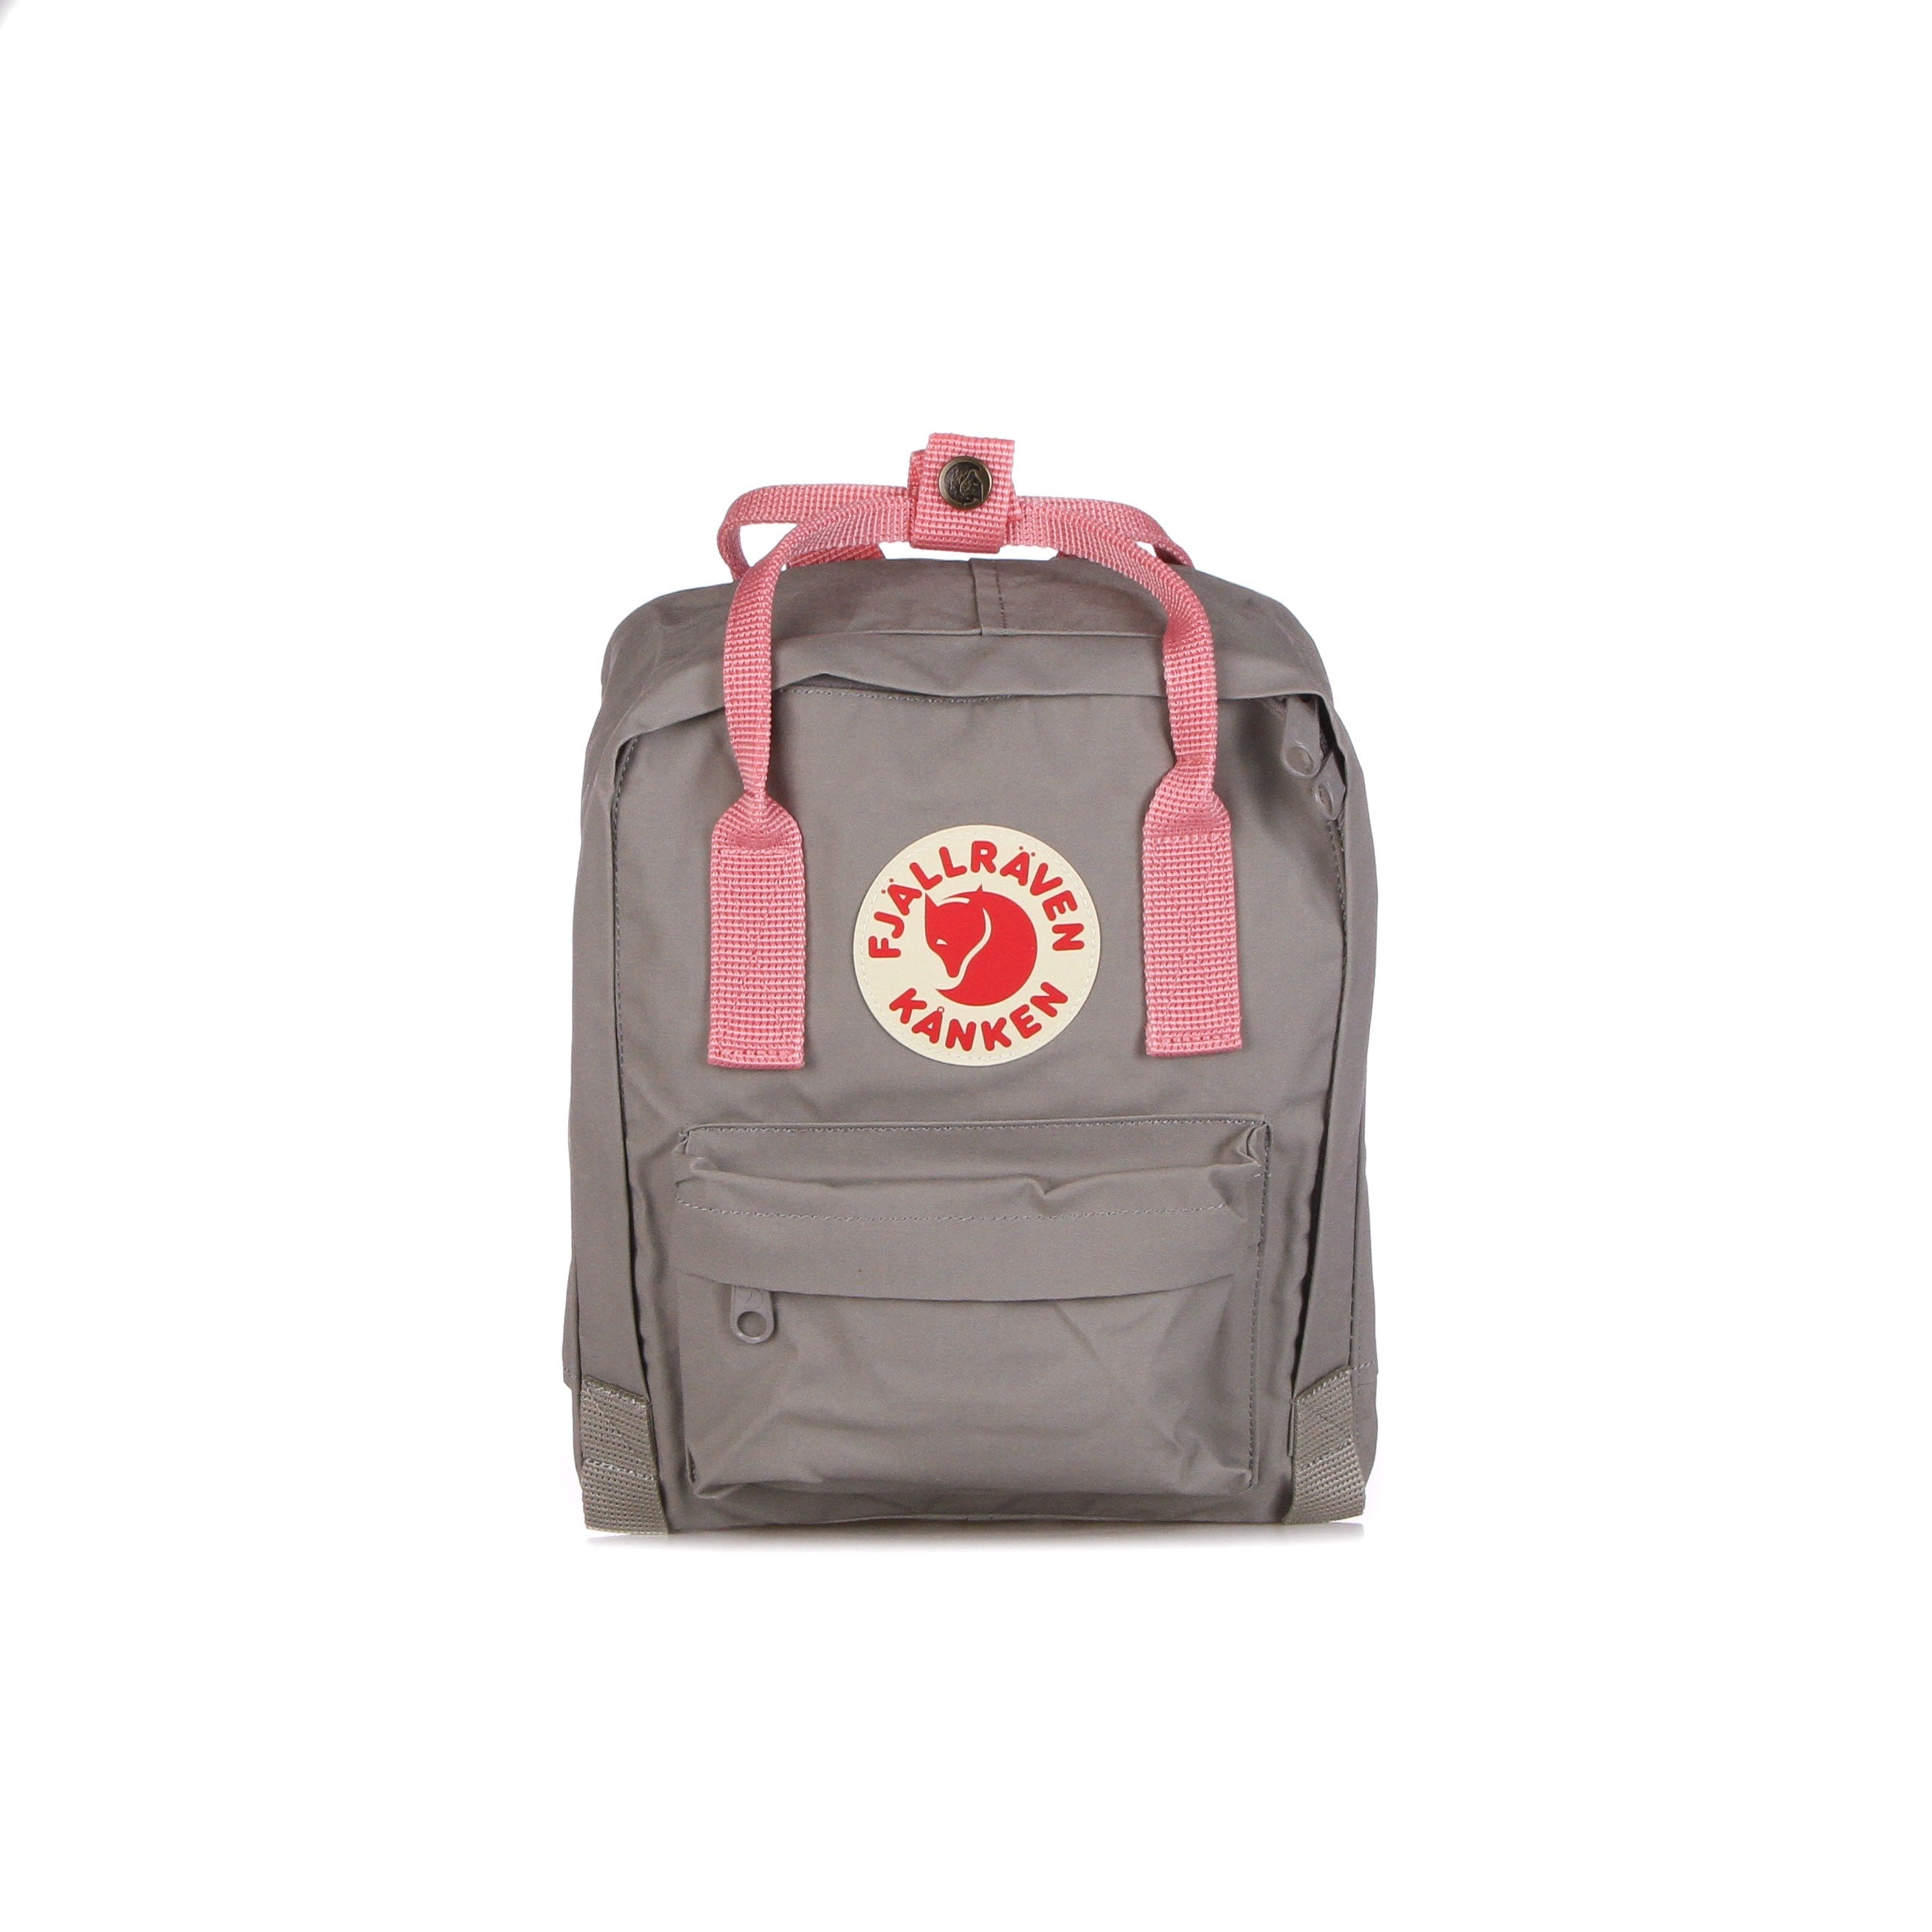 Unisex Kanken Mini Fog/pink backpack